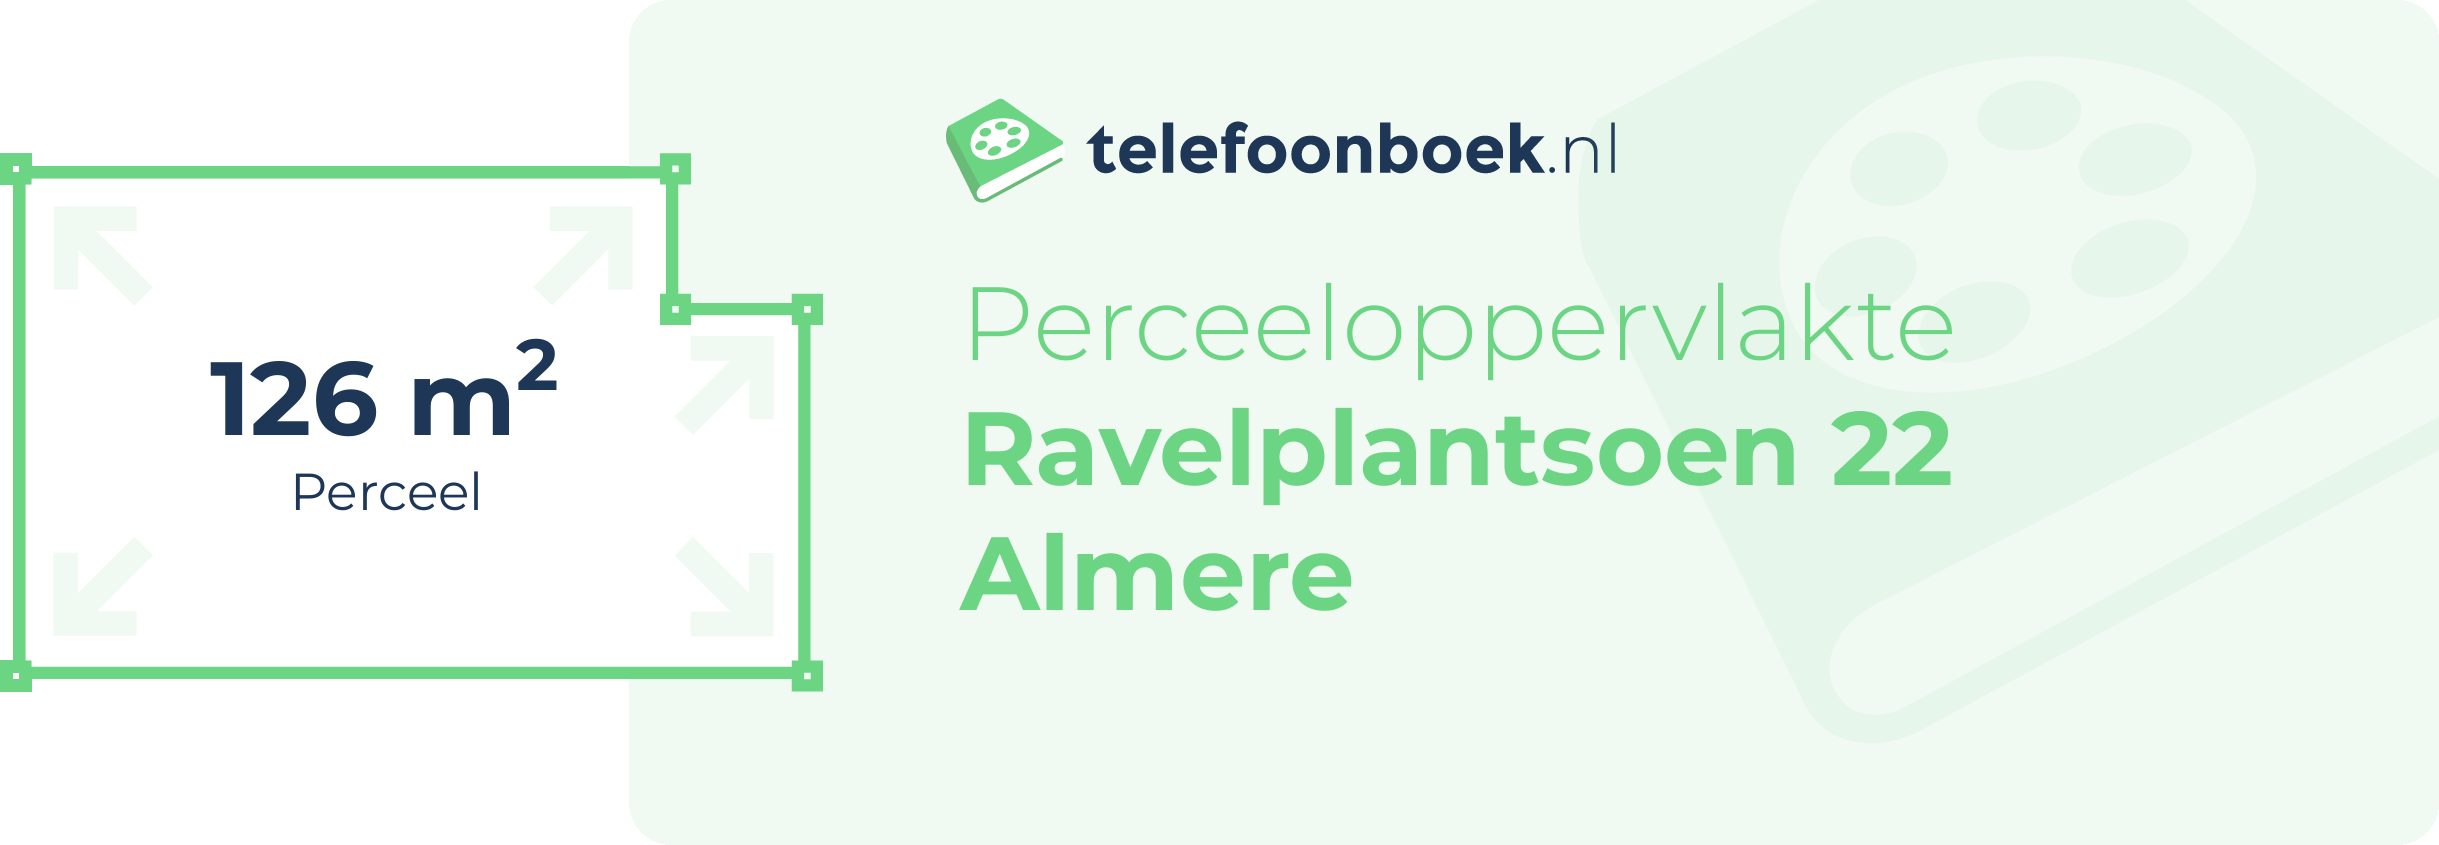 Perceeloppervlakte Ravelplantsoen 22 Almere